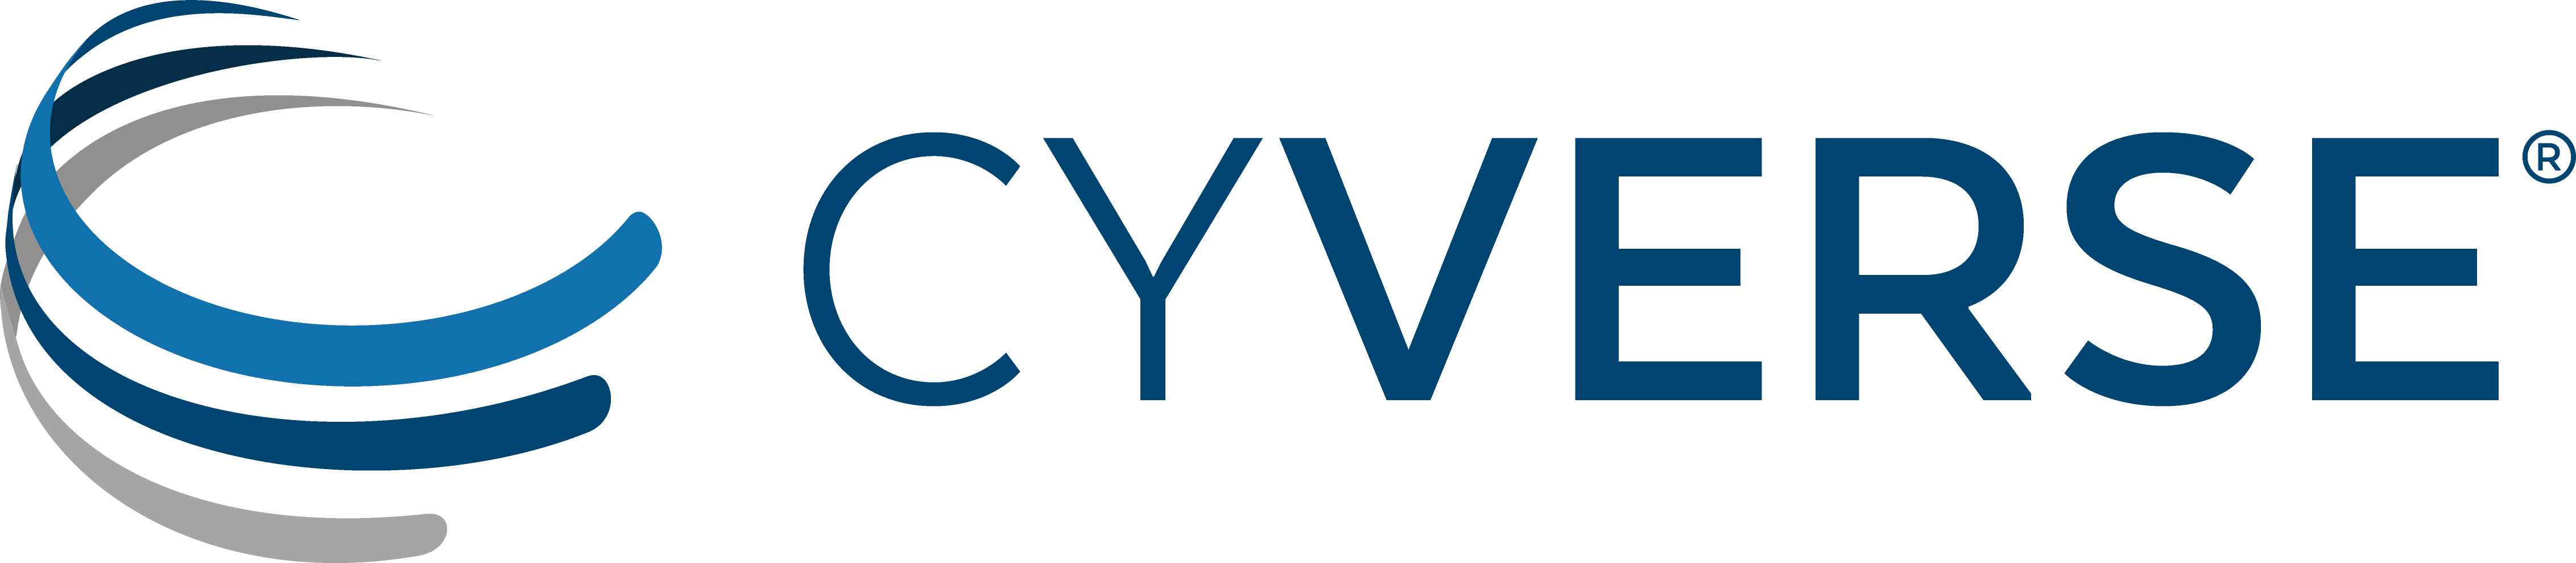 Cyverse logo